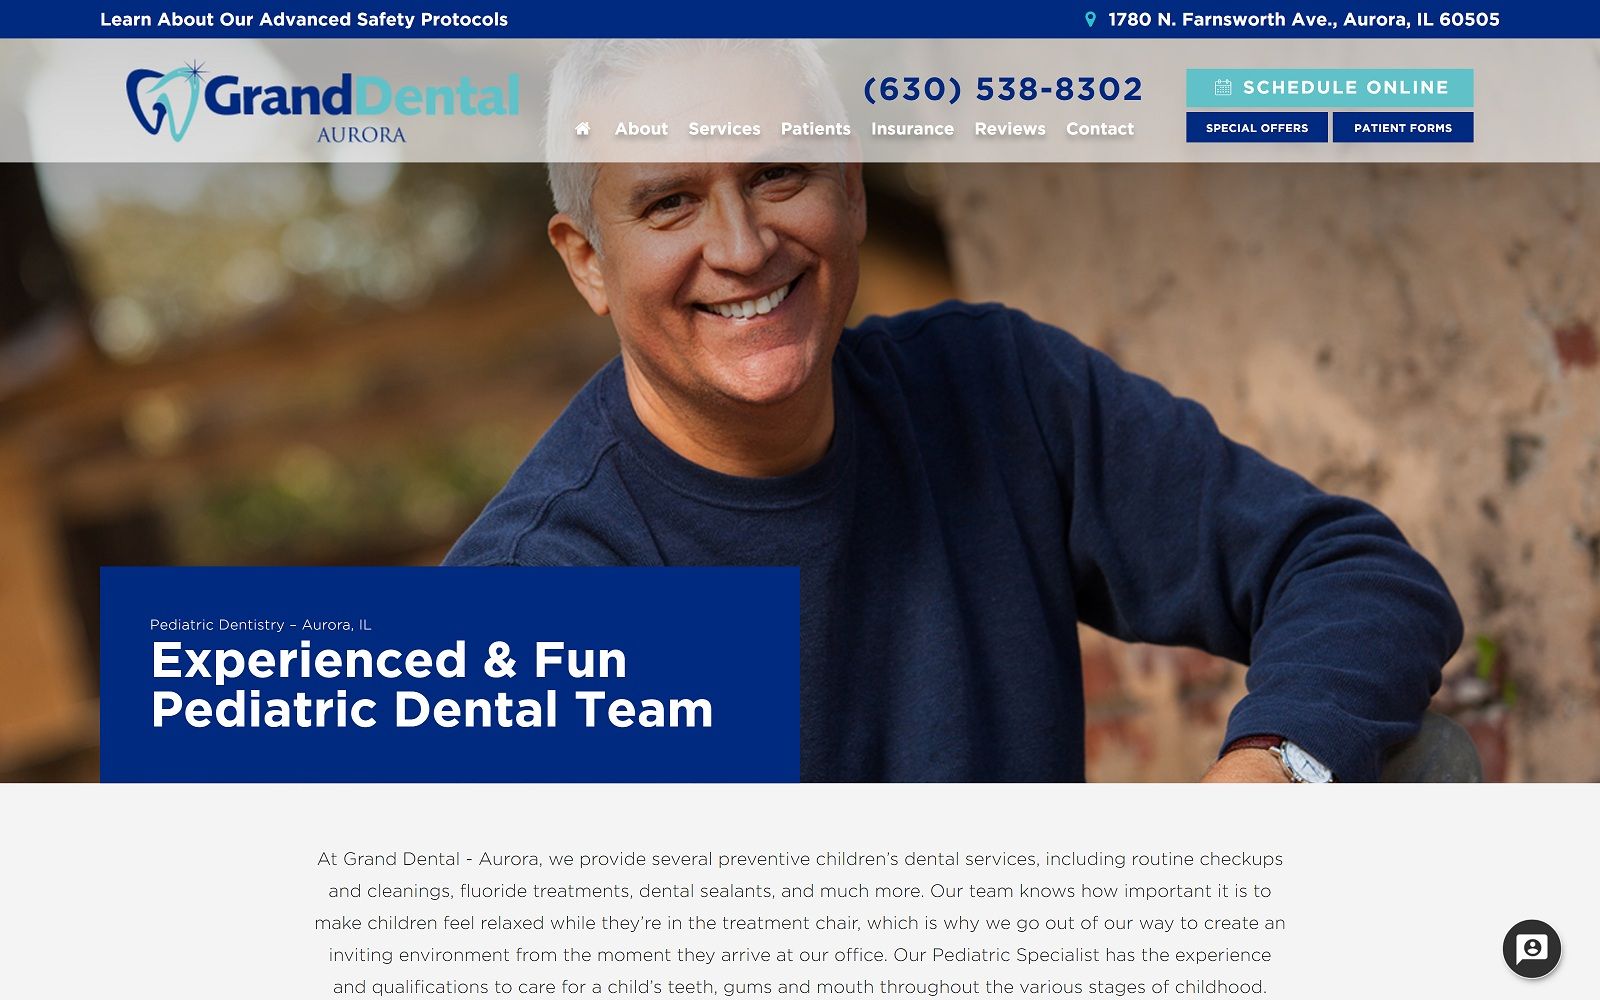 The screenshot of grand dental - aurora granddentalaurora. Com website